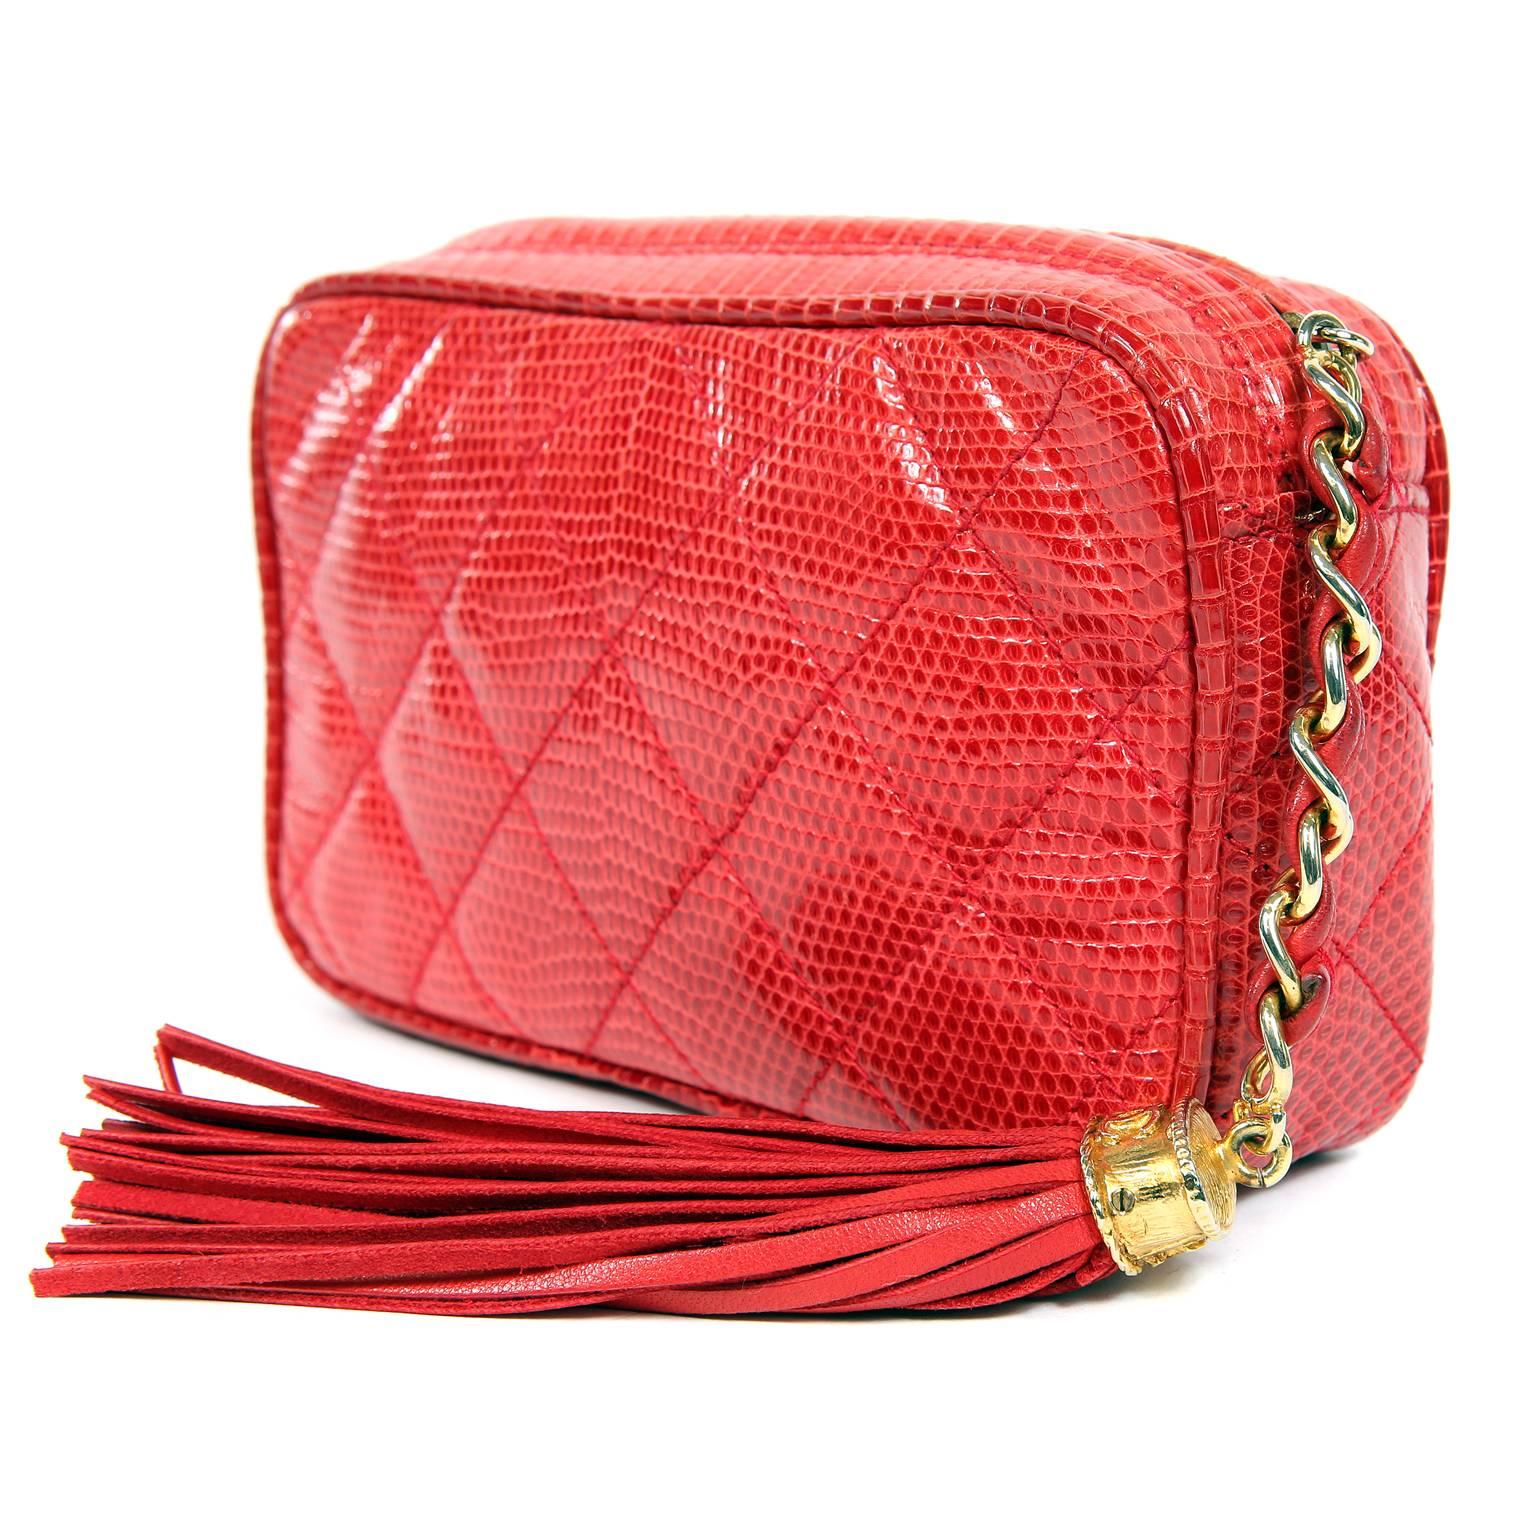 Chanel Red Lizard Vintage Tassel Clutch For Sale 3